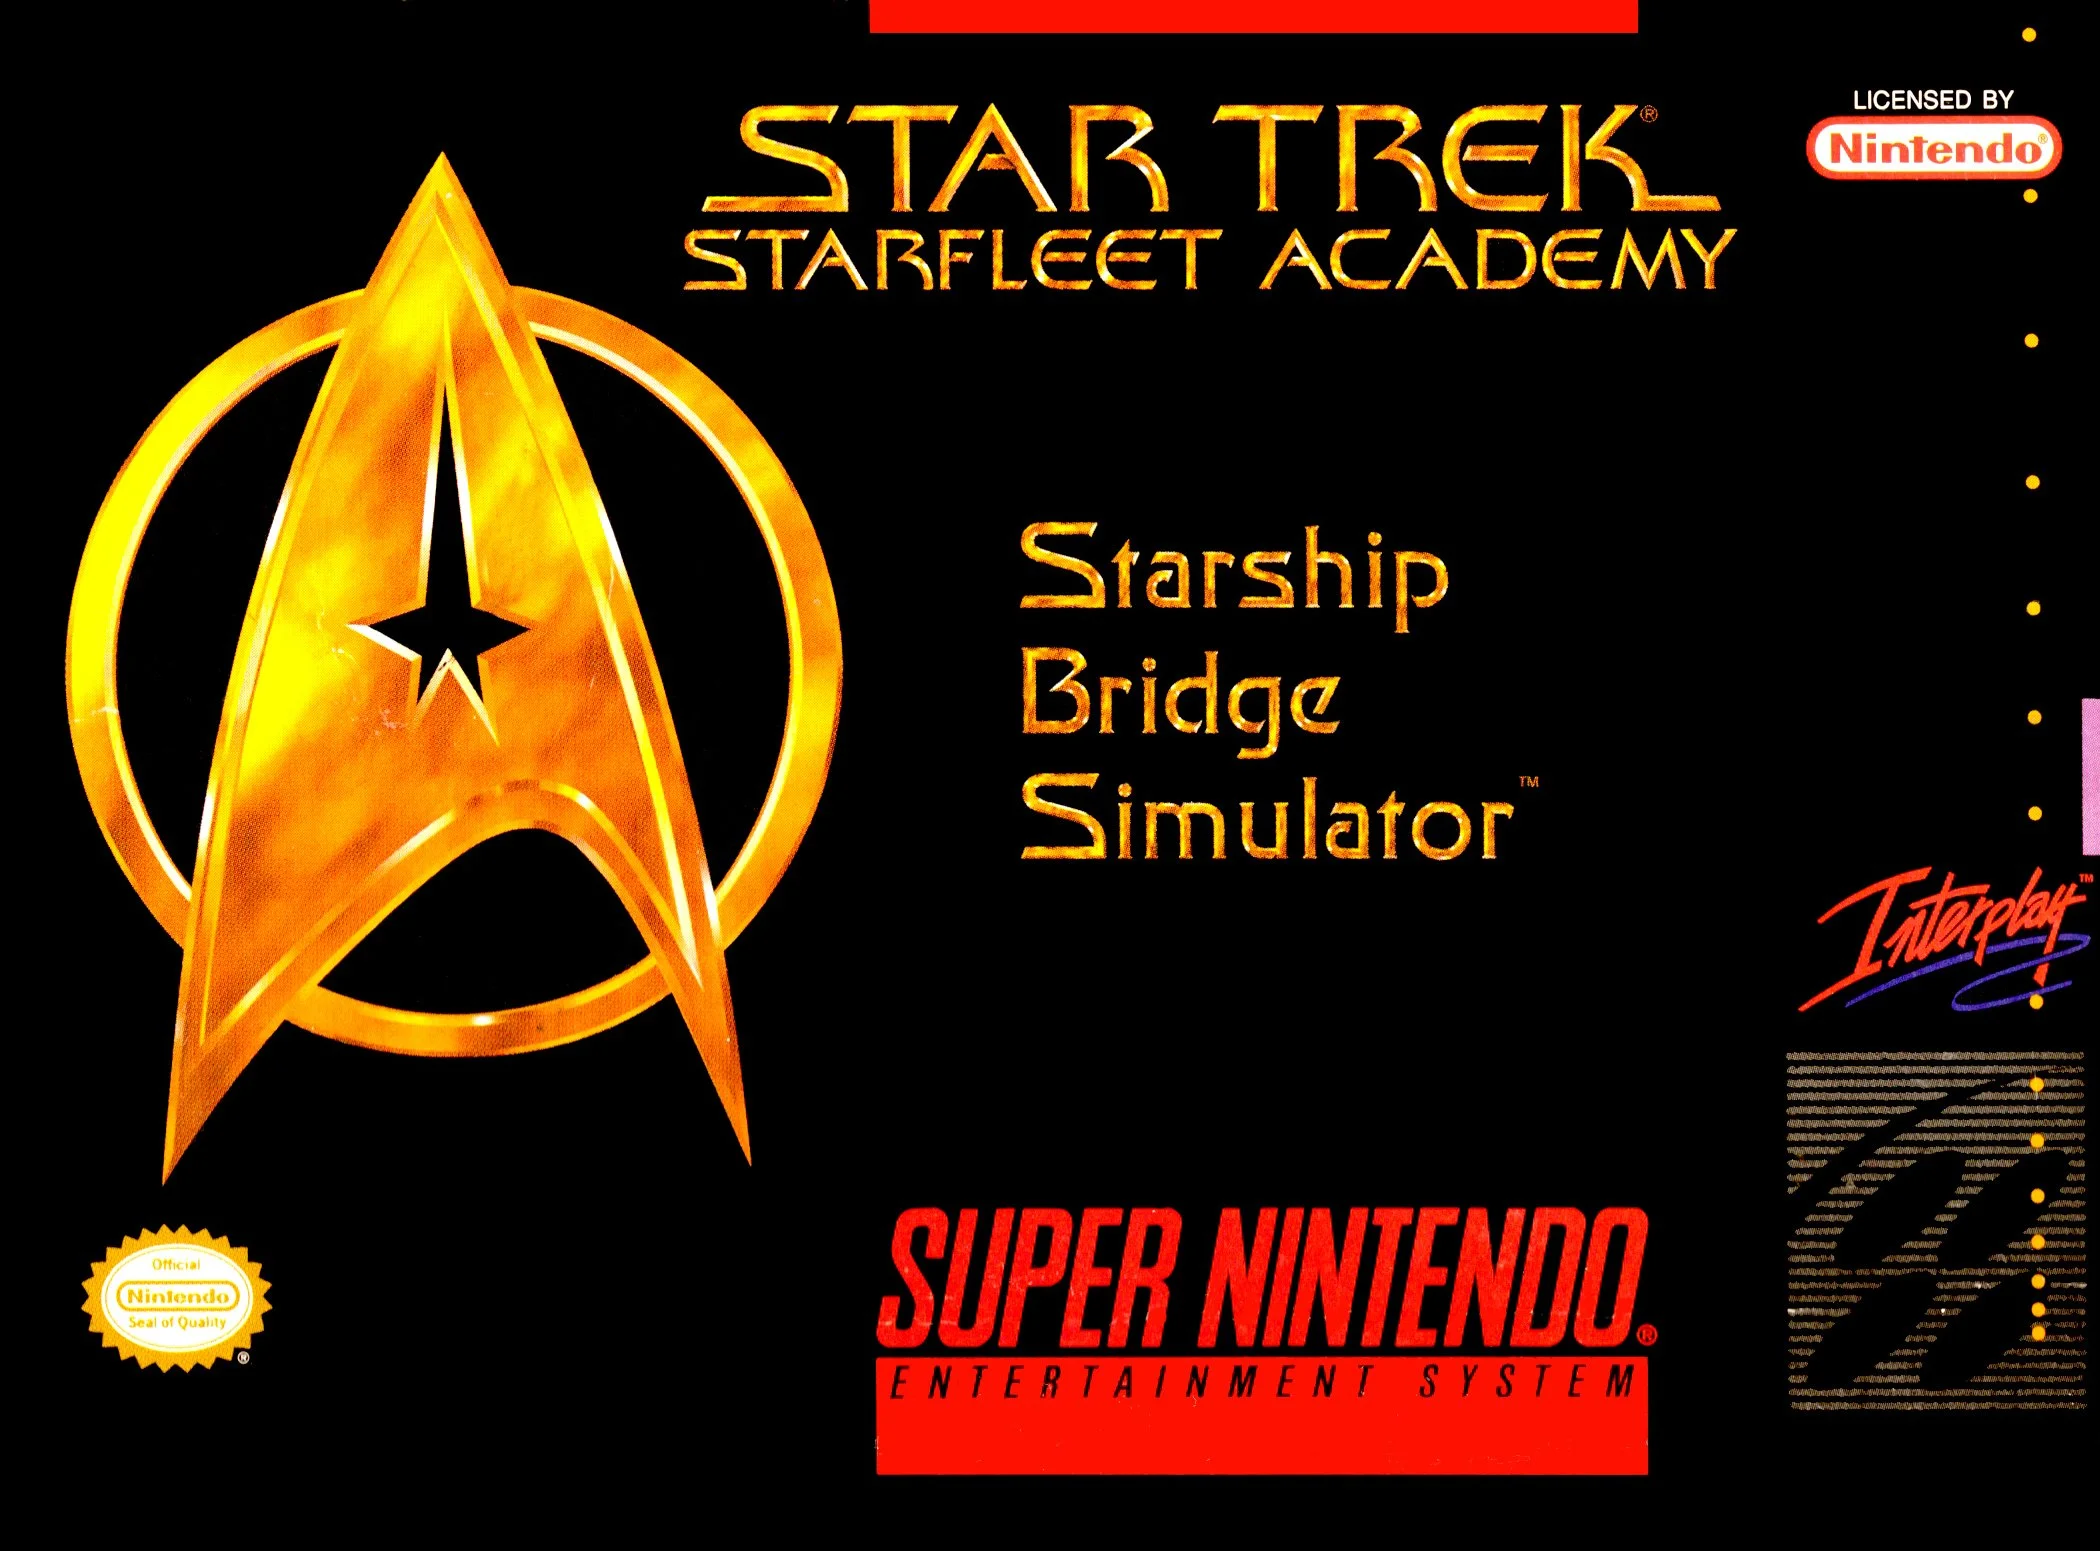 Star Trek: Starfleet Academy Starship Bridge Simulator